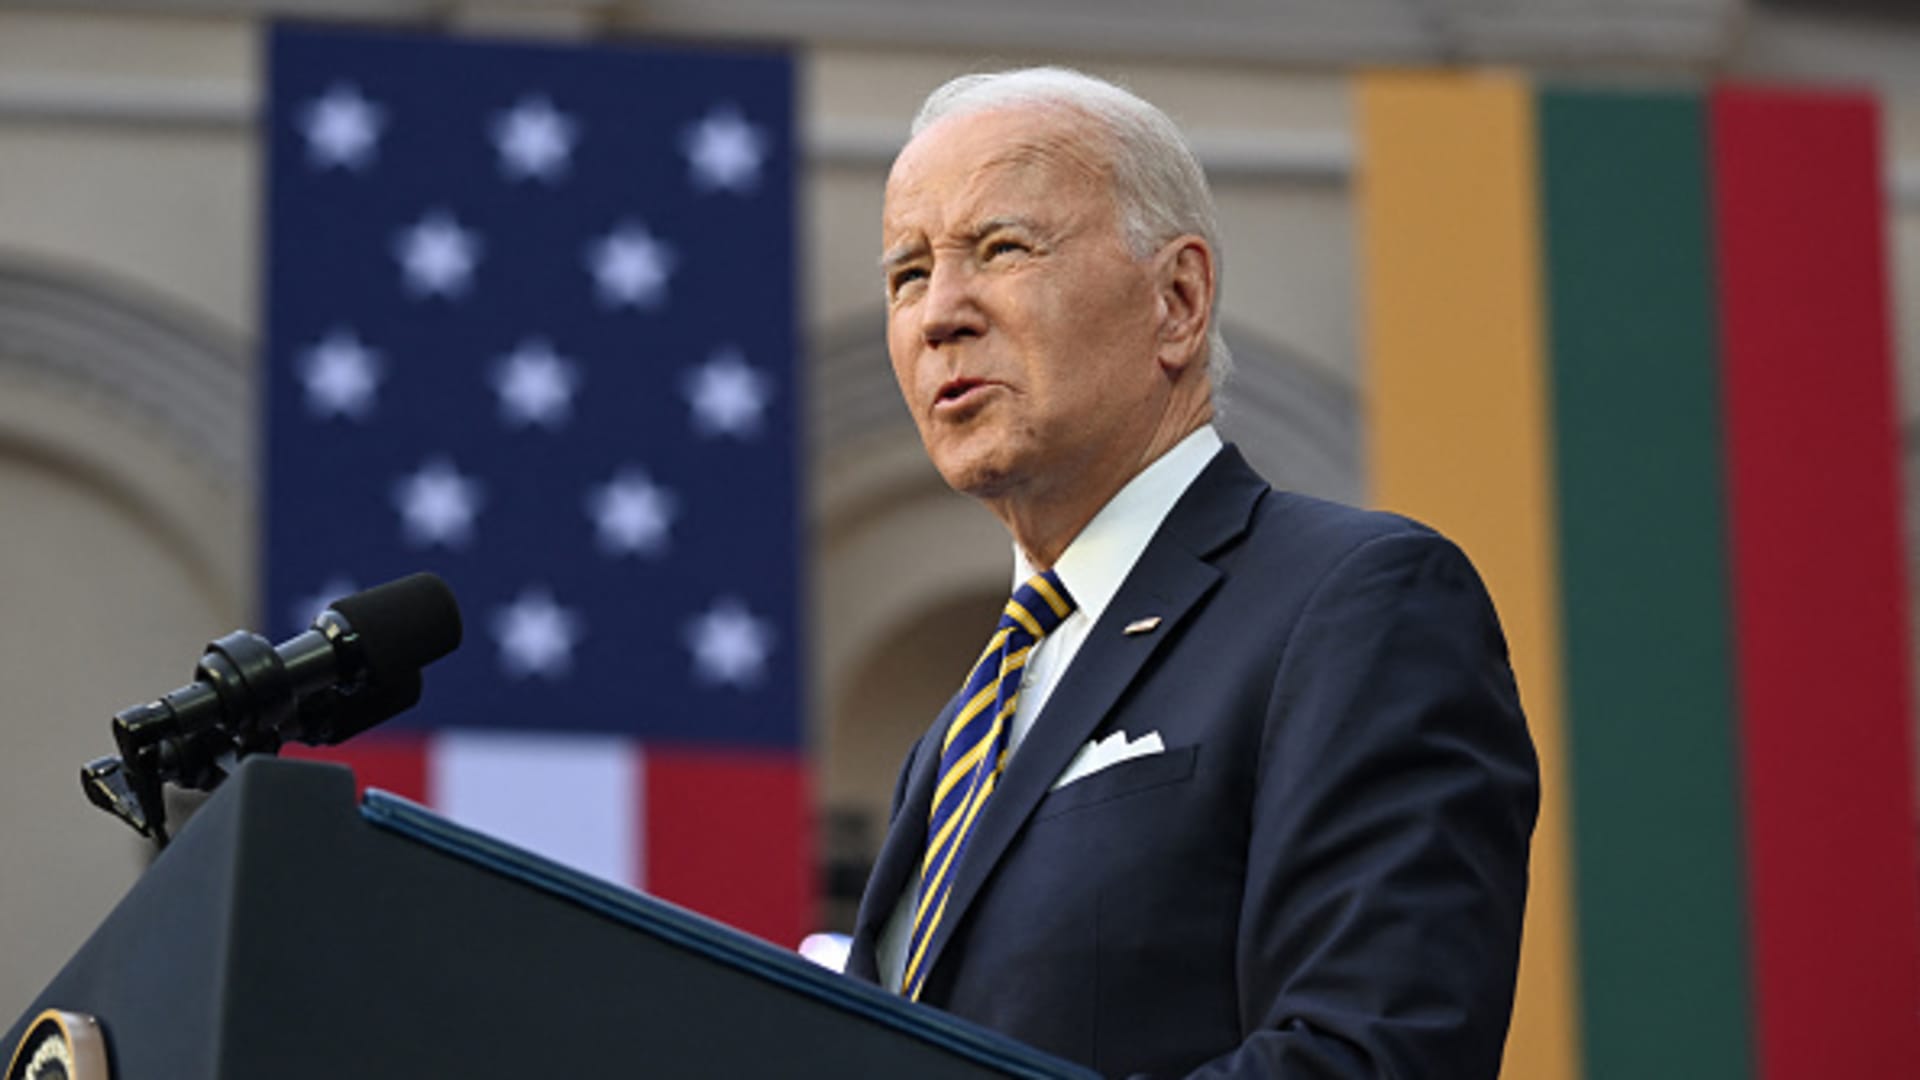 ‘We will not waver:’ Biden reaffirms U.S. support for Ukraine as Zelenskyy pushes to join NATO